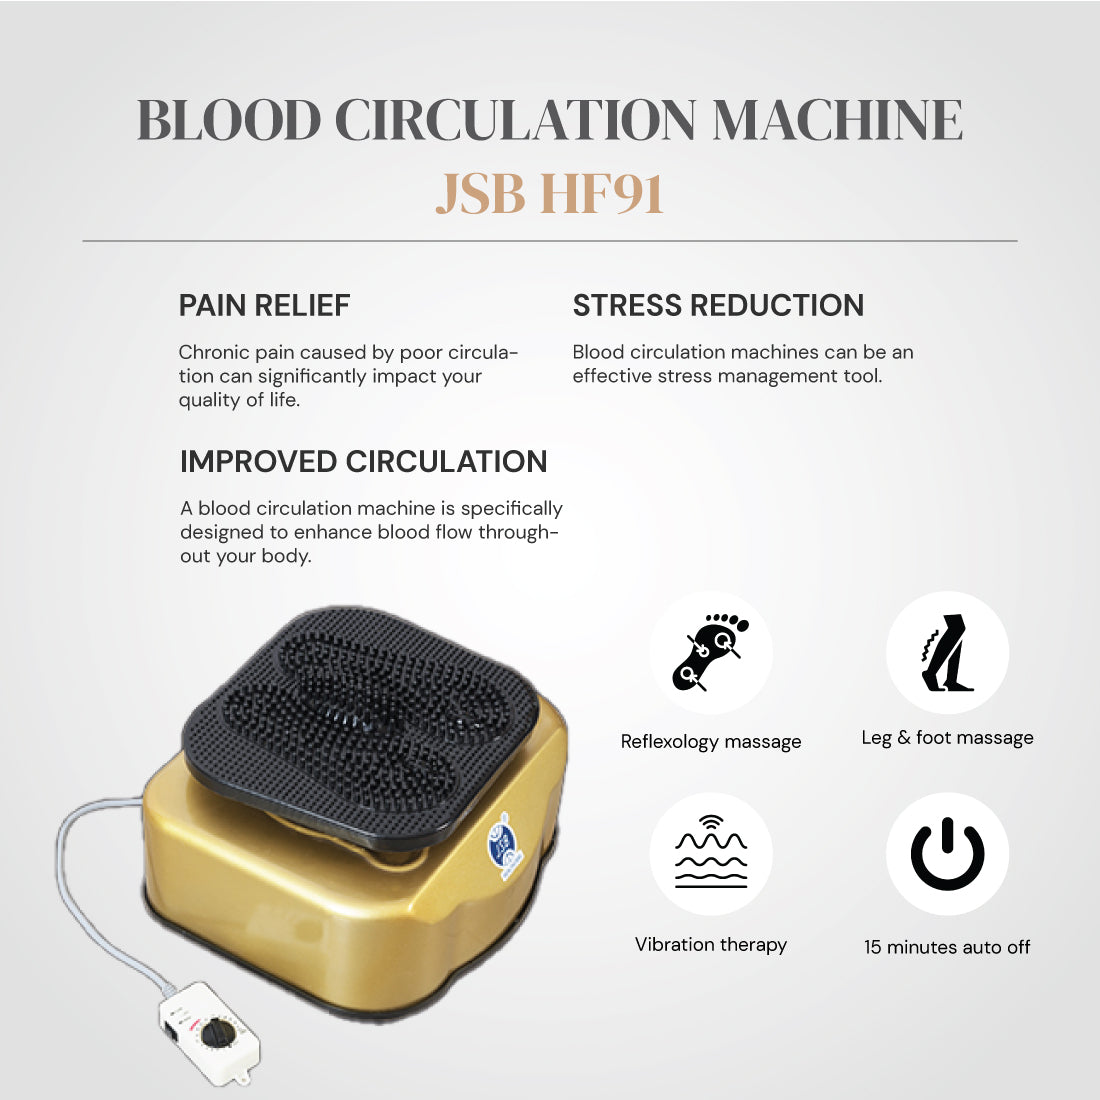 blood circulation machine jsb hf91 pain relief